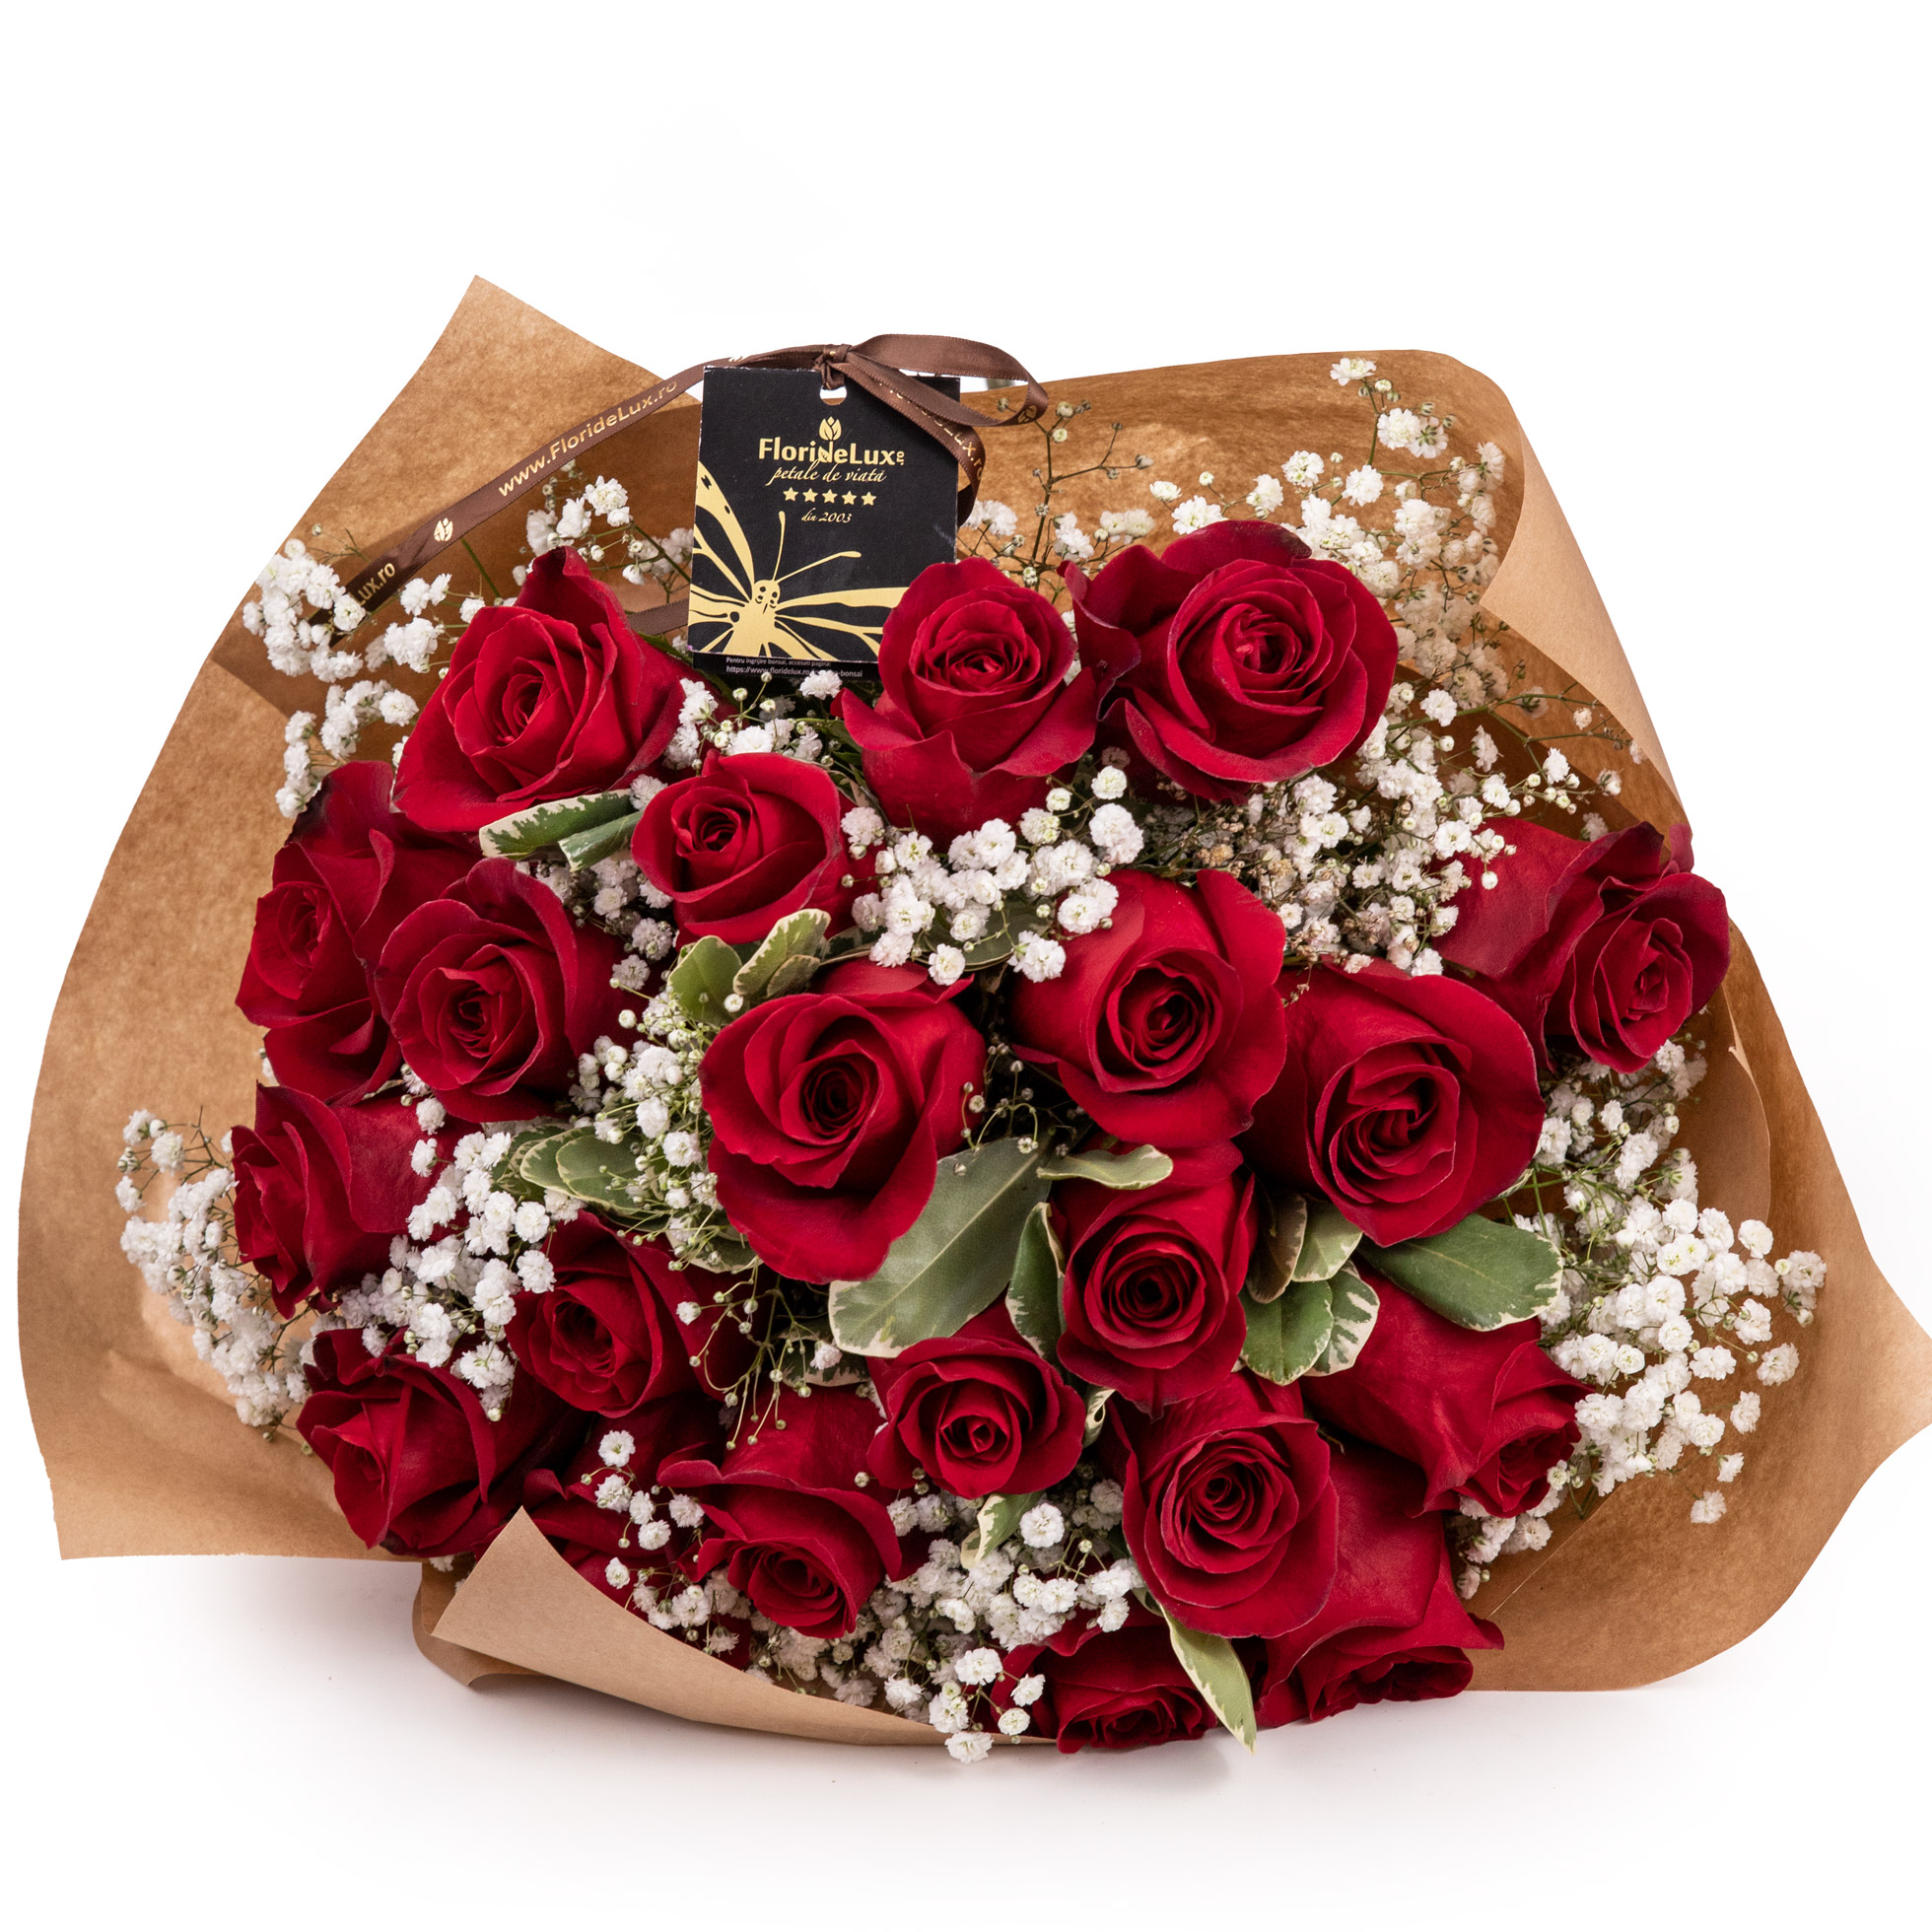 Buchet romantic trandafiri With You-Standard